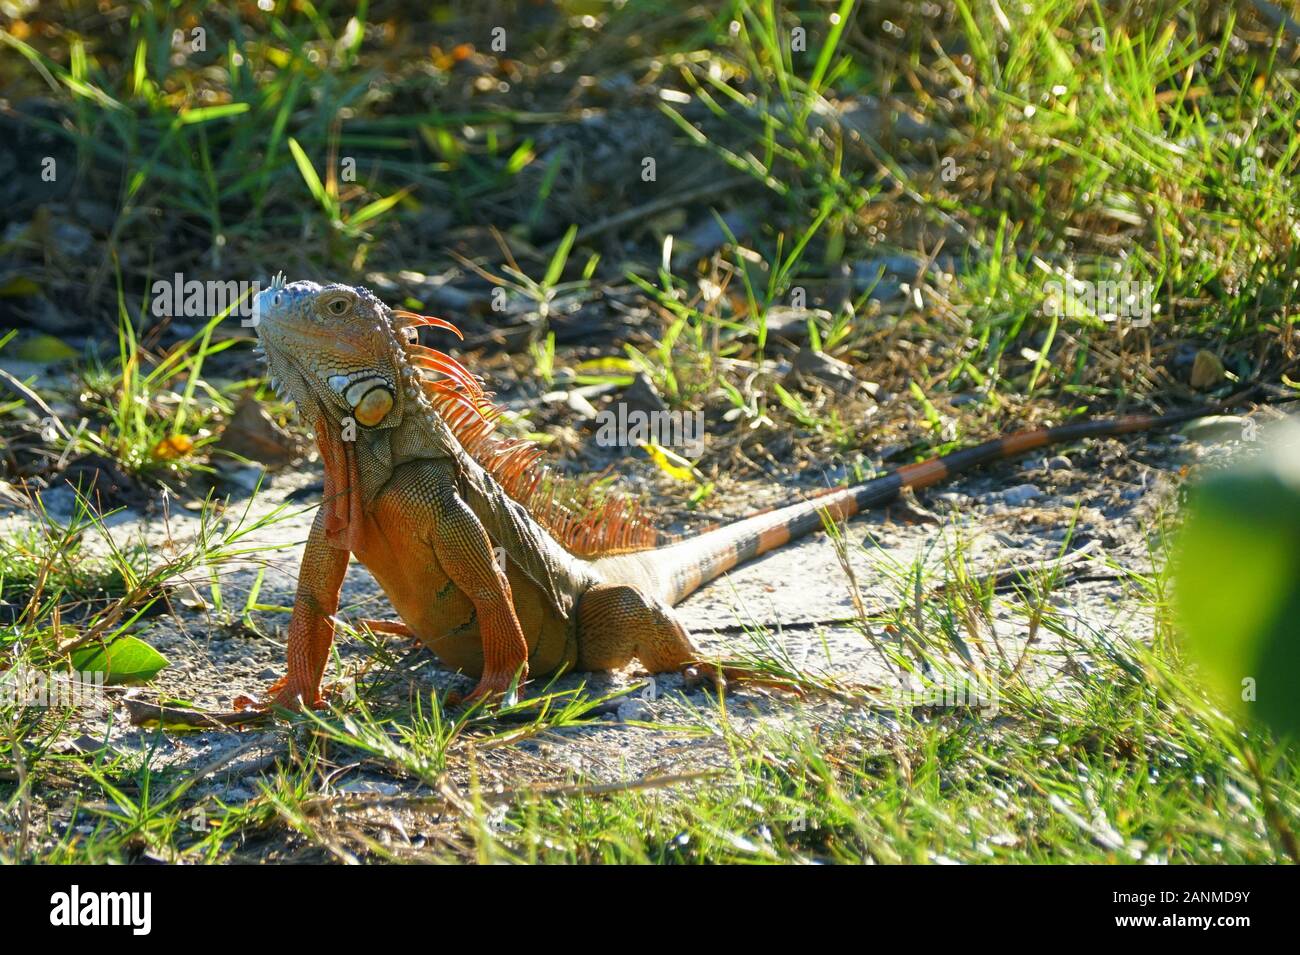 A red iguana on the ground near Dania Beach, Florida, U.S.A Stock Photo